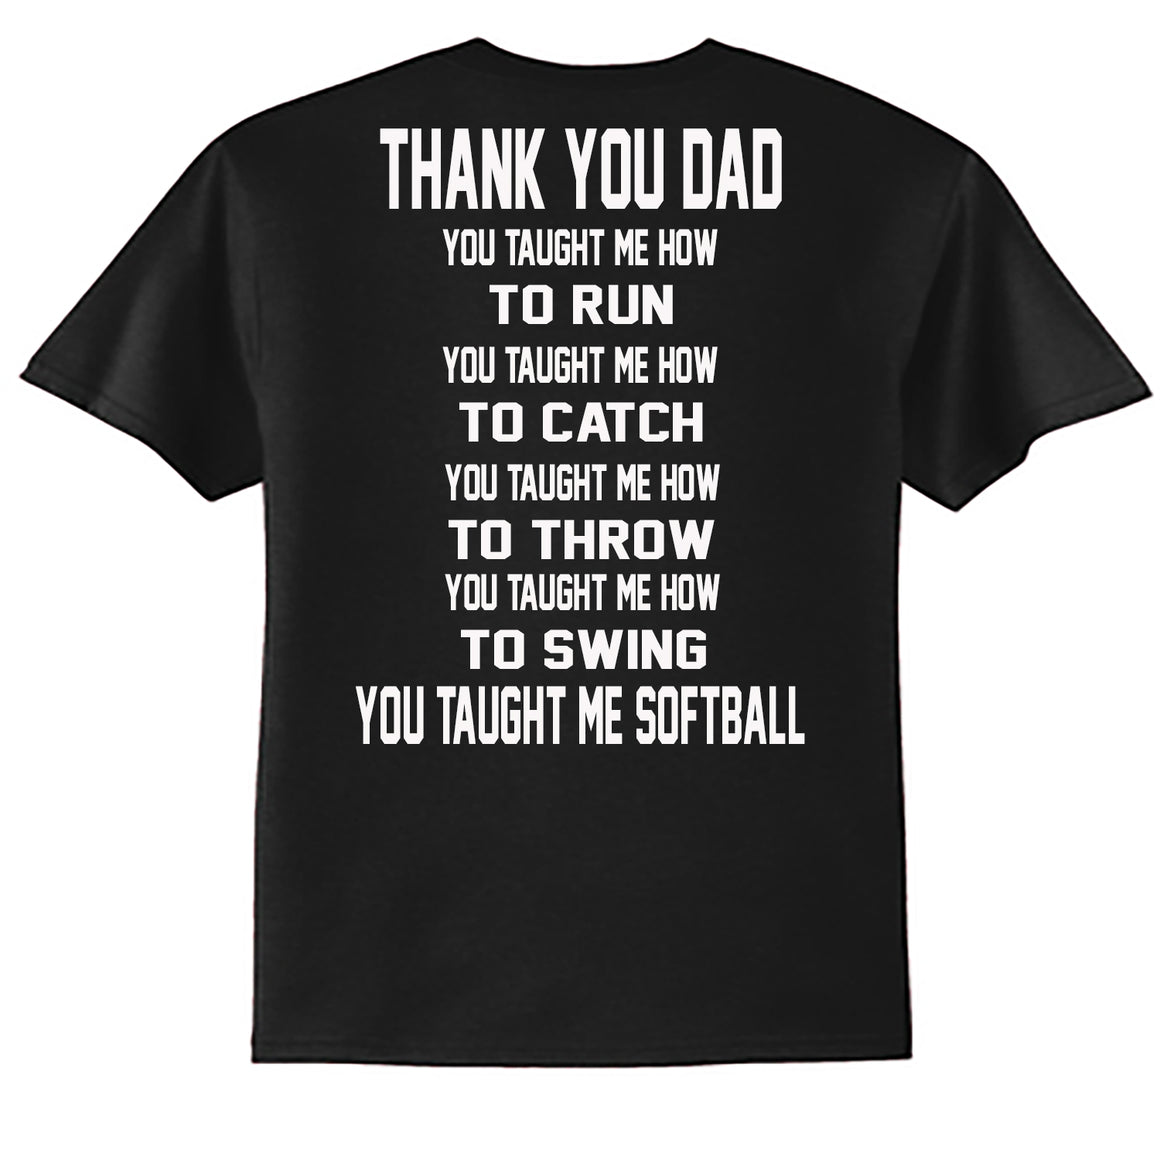 Dad Taught Me Softball